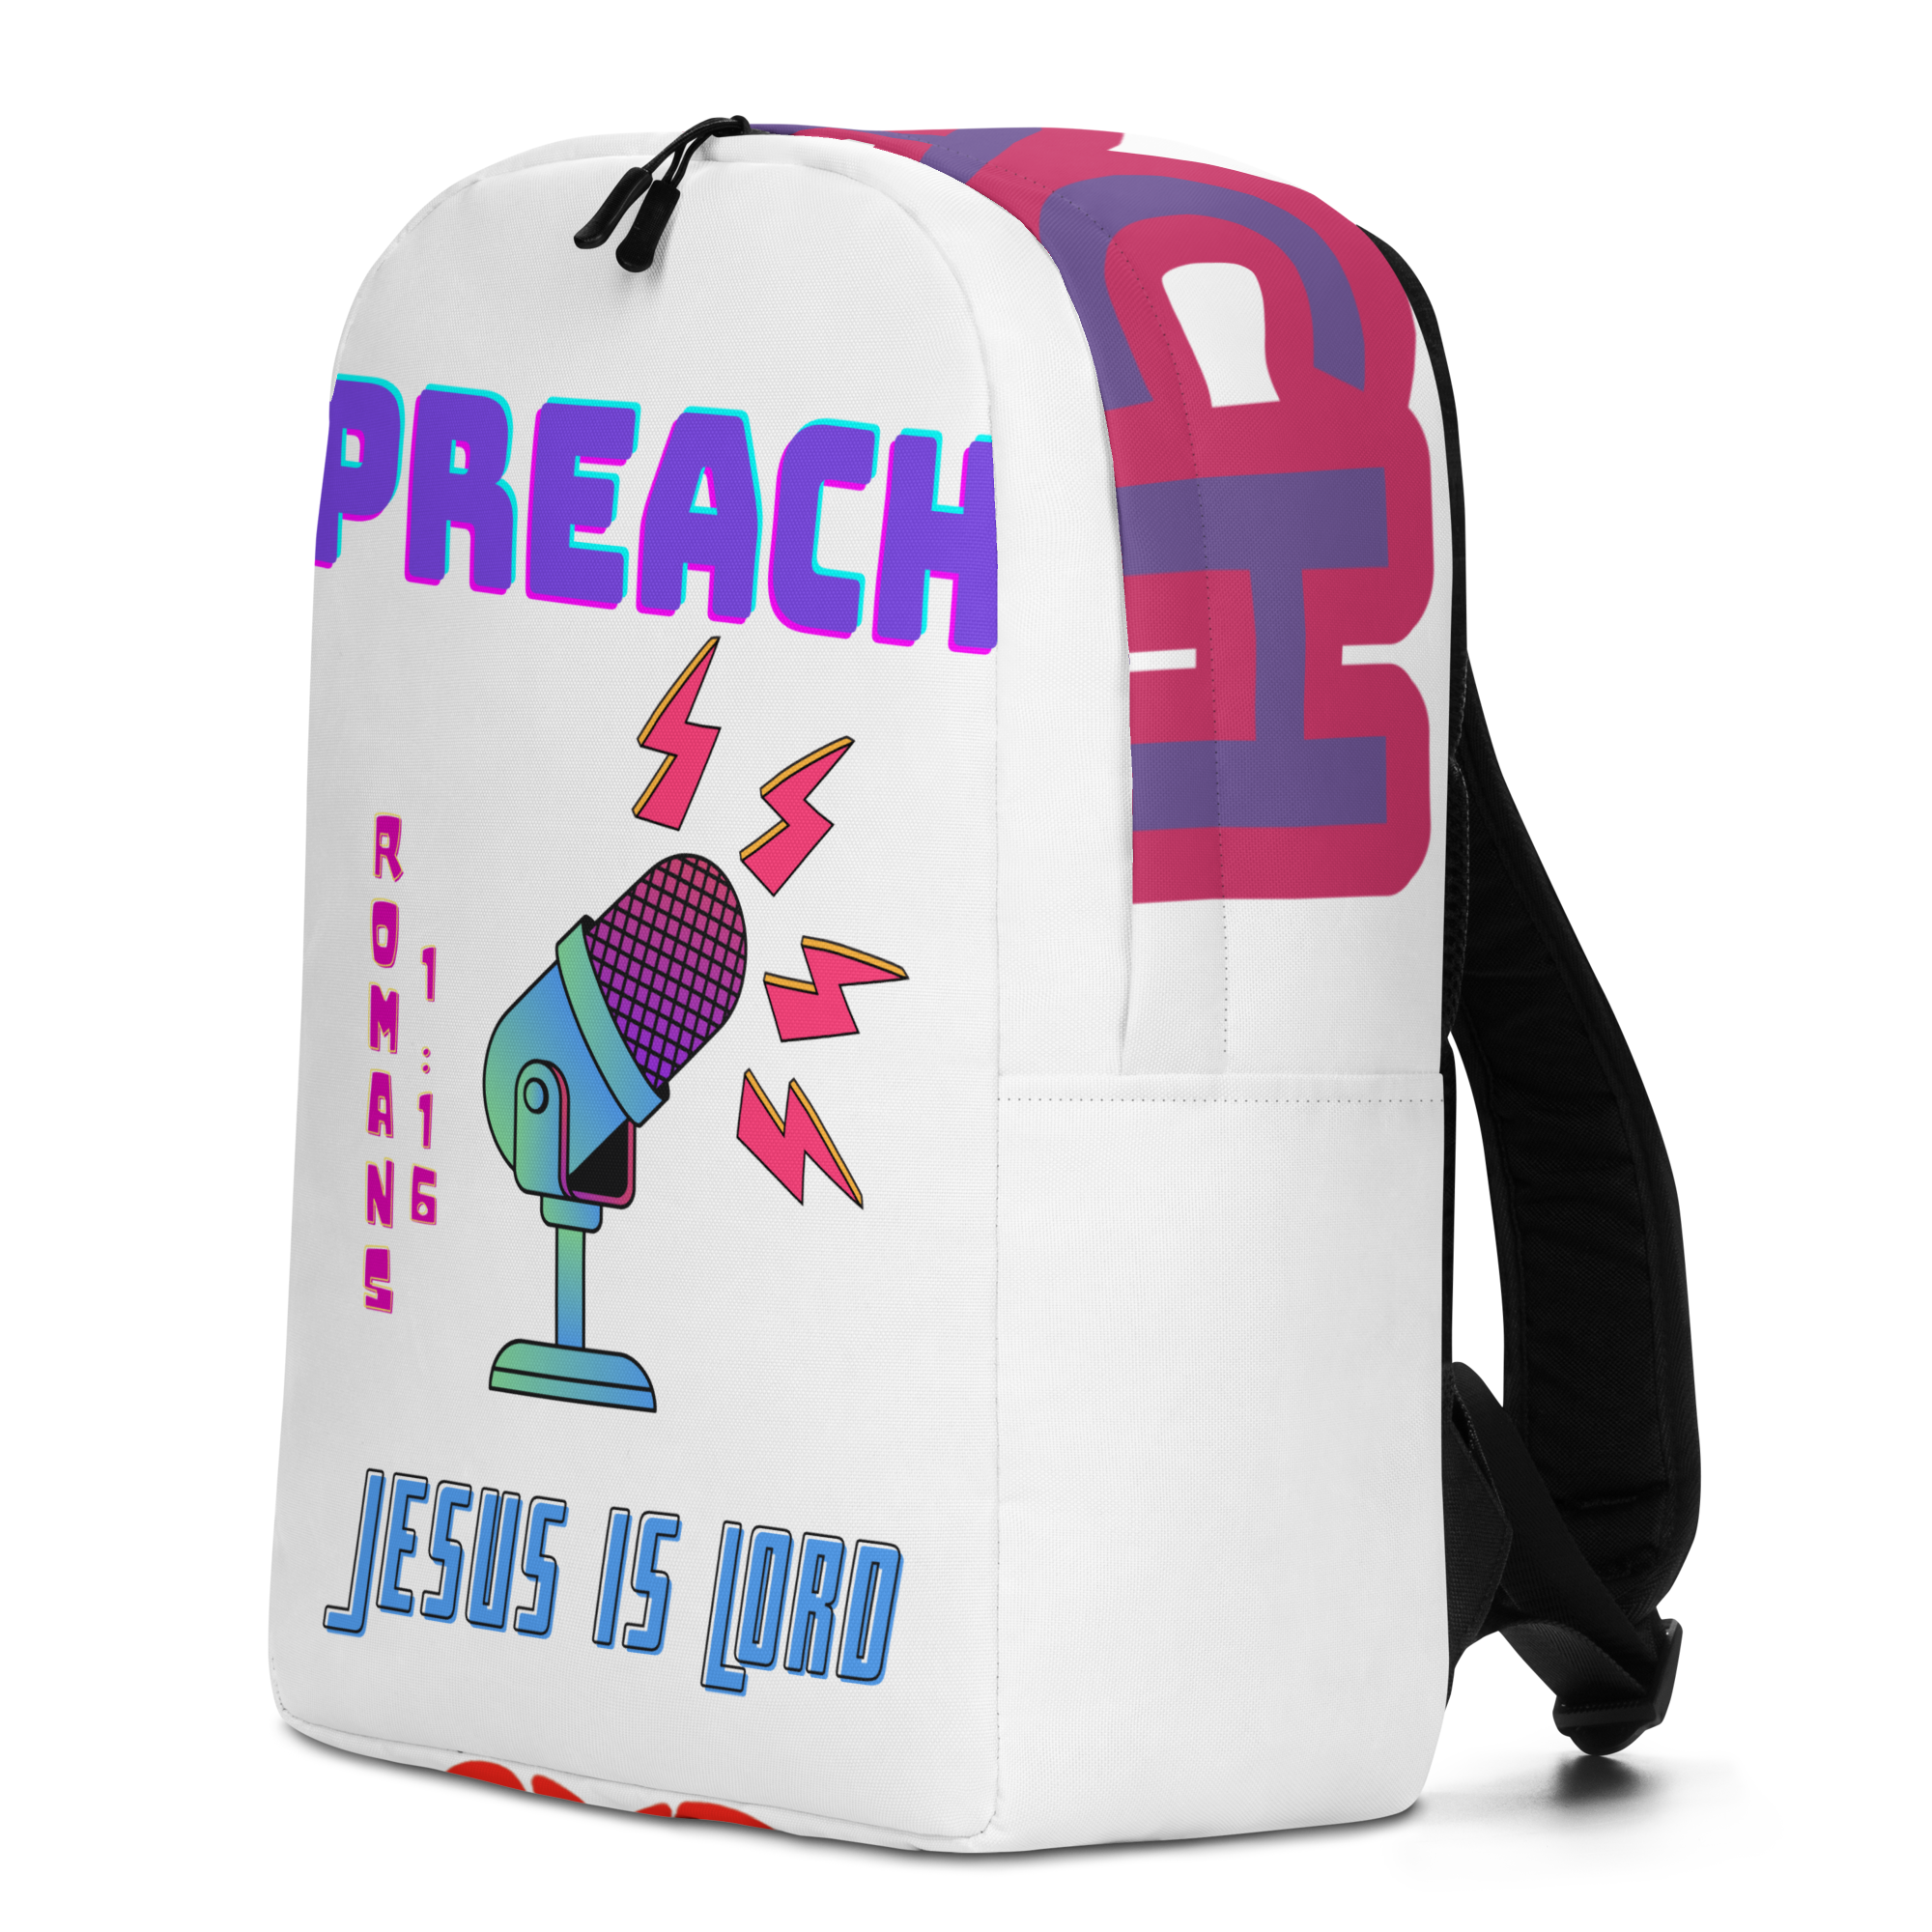 Preach Jesus is LORD Minimalist Backpack